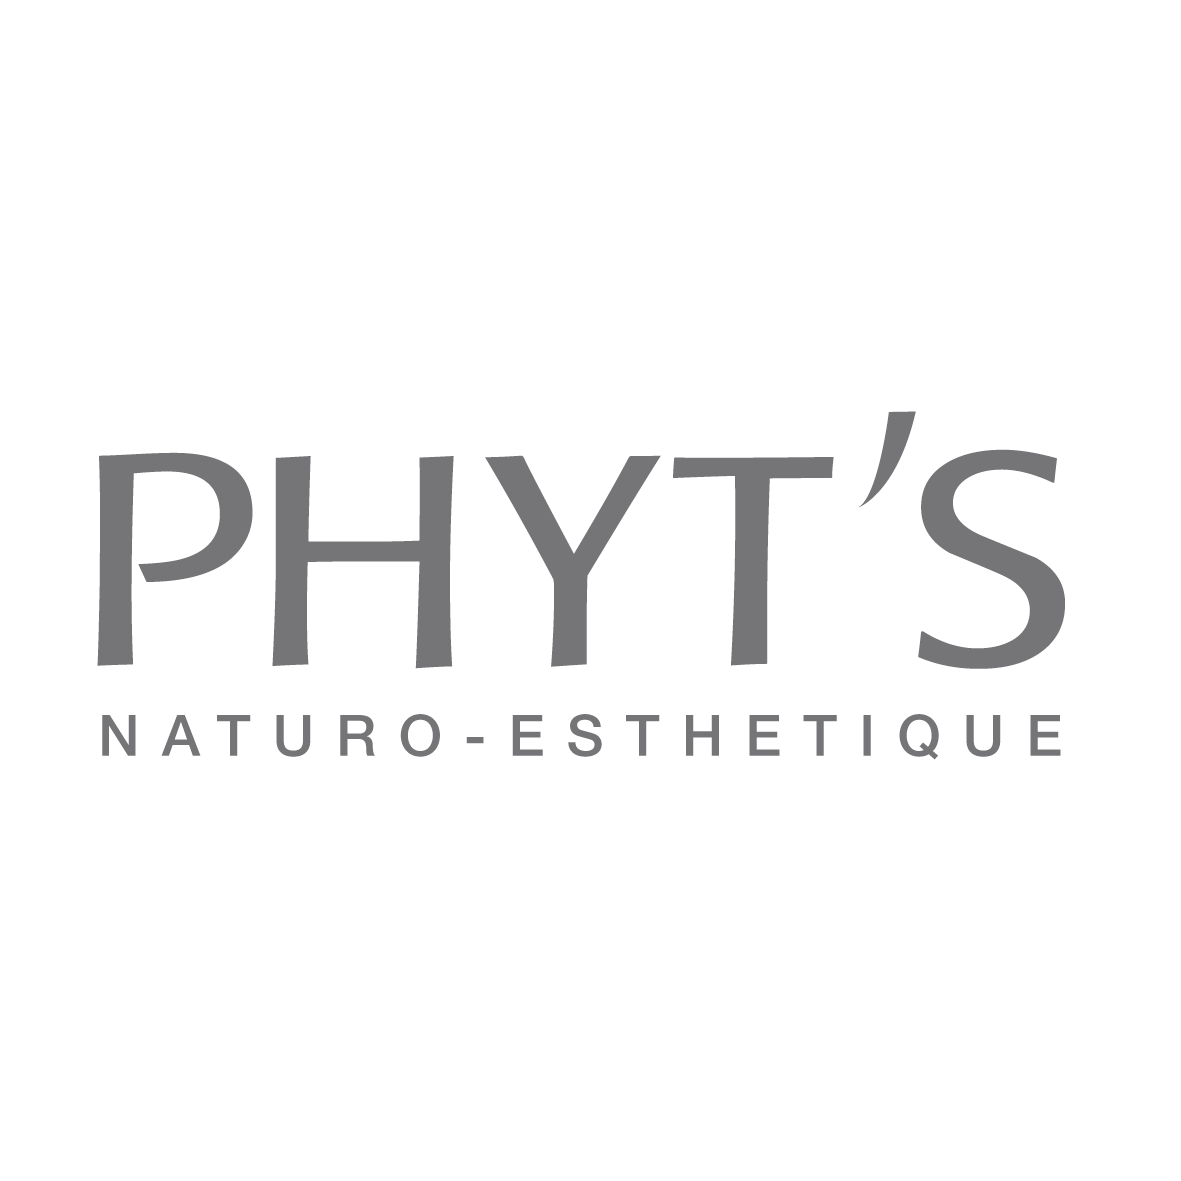 Phyt's logo